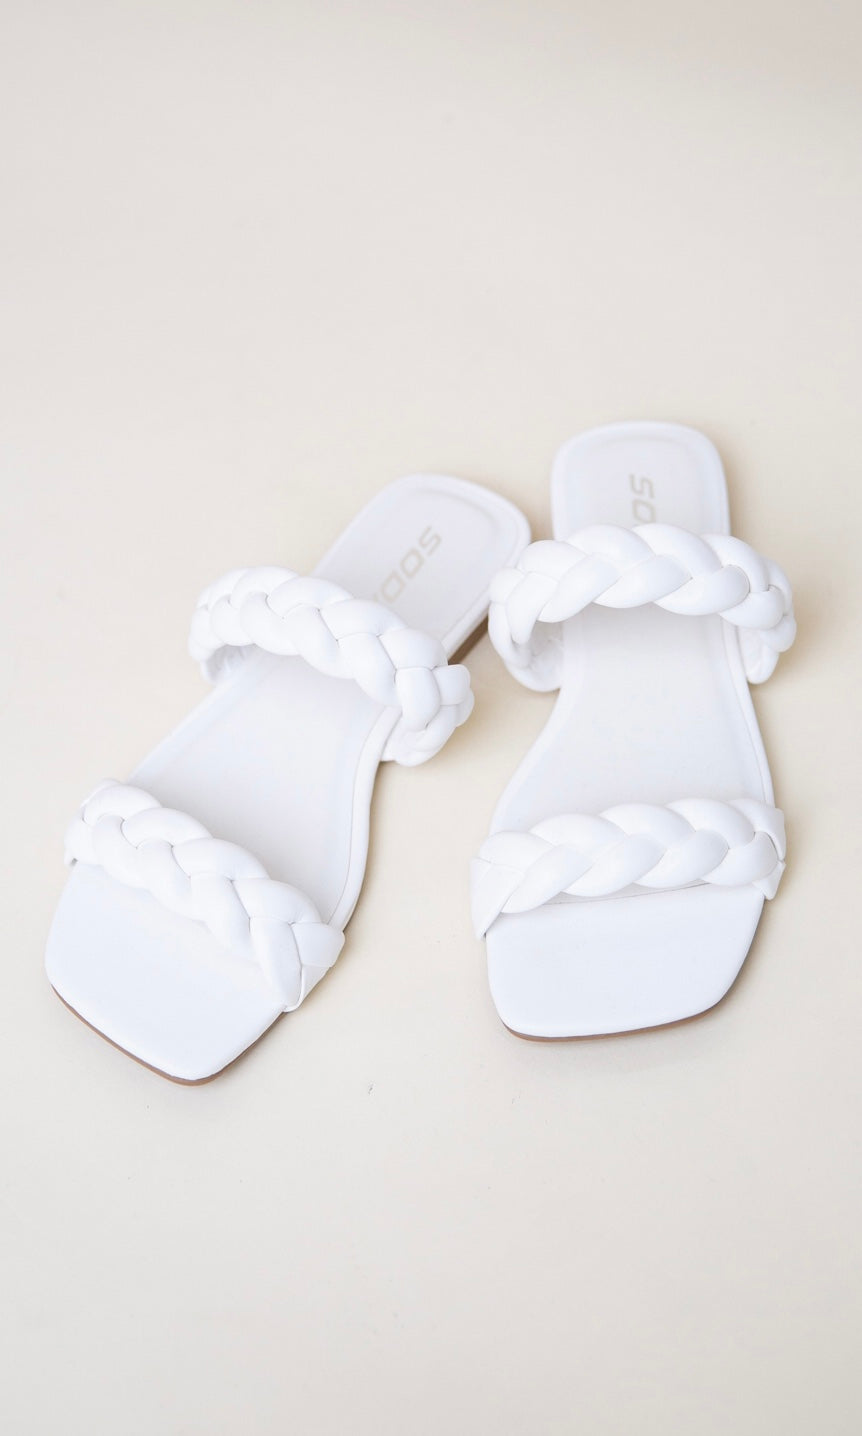 Braided Causal Sandals - White